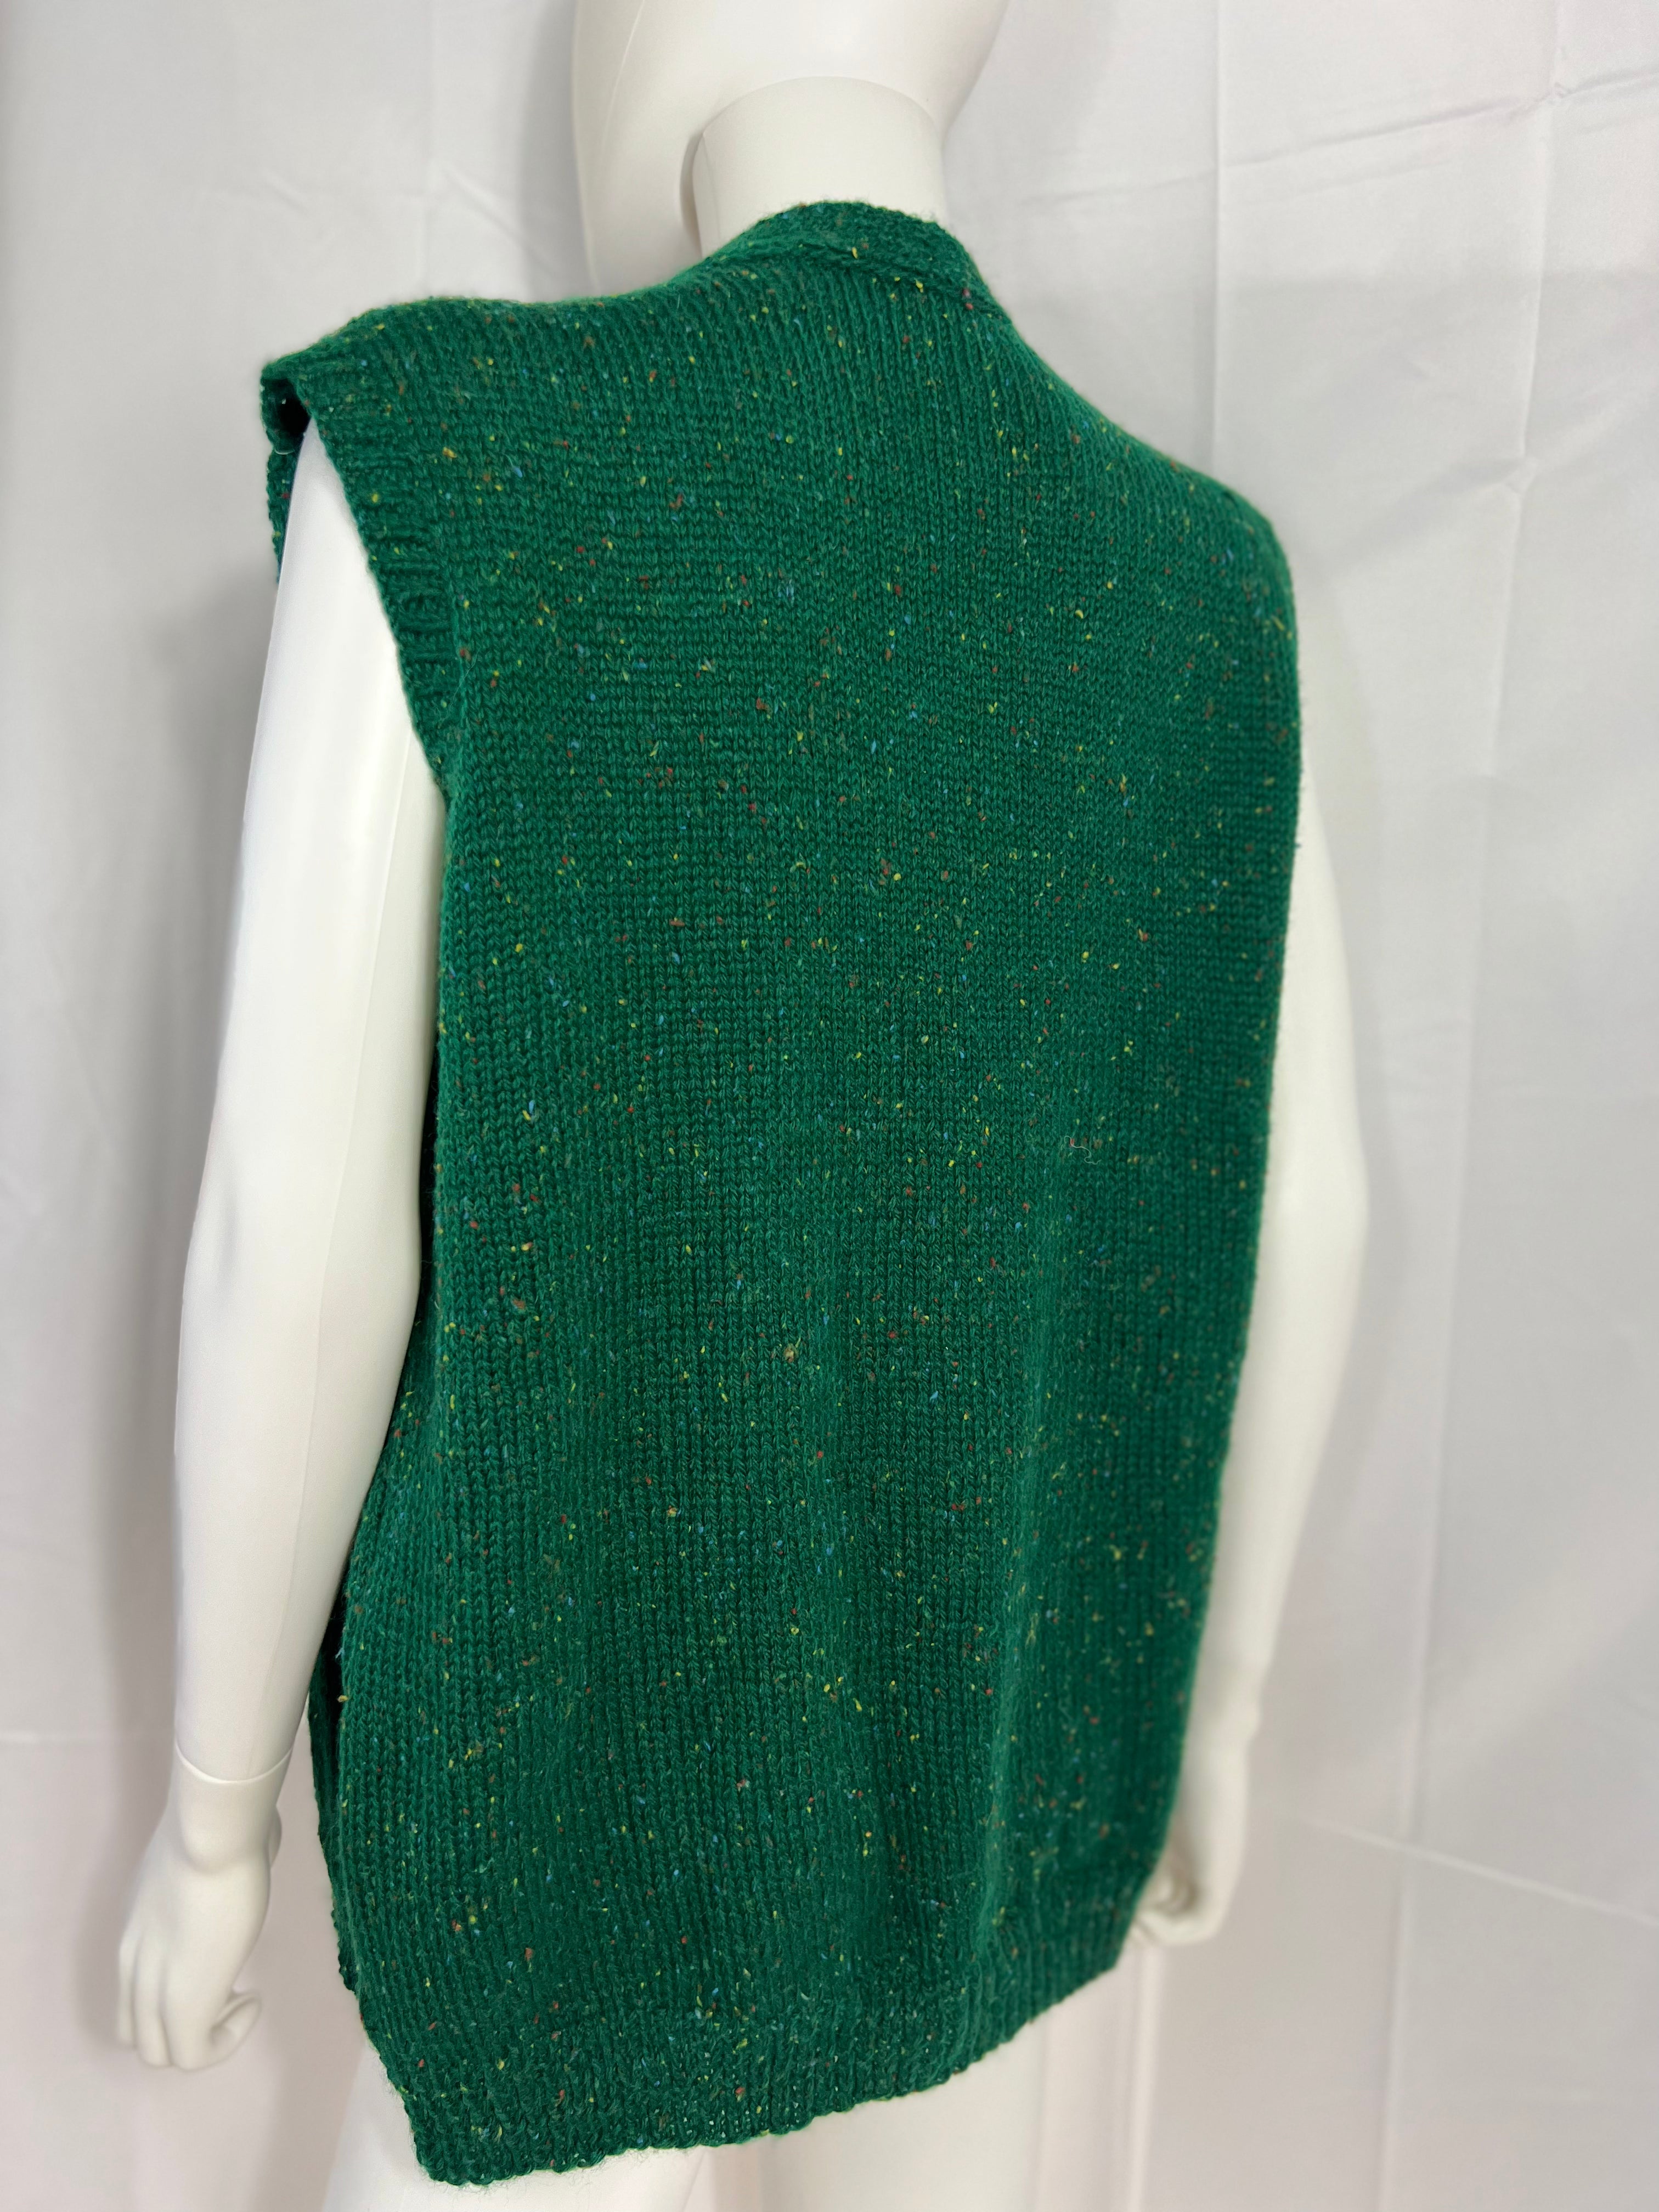 1980's Dark Green Knit Vest